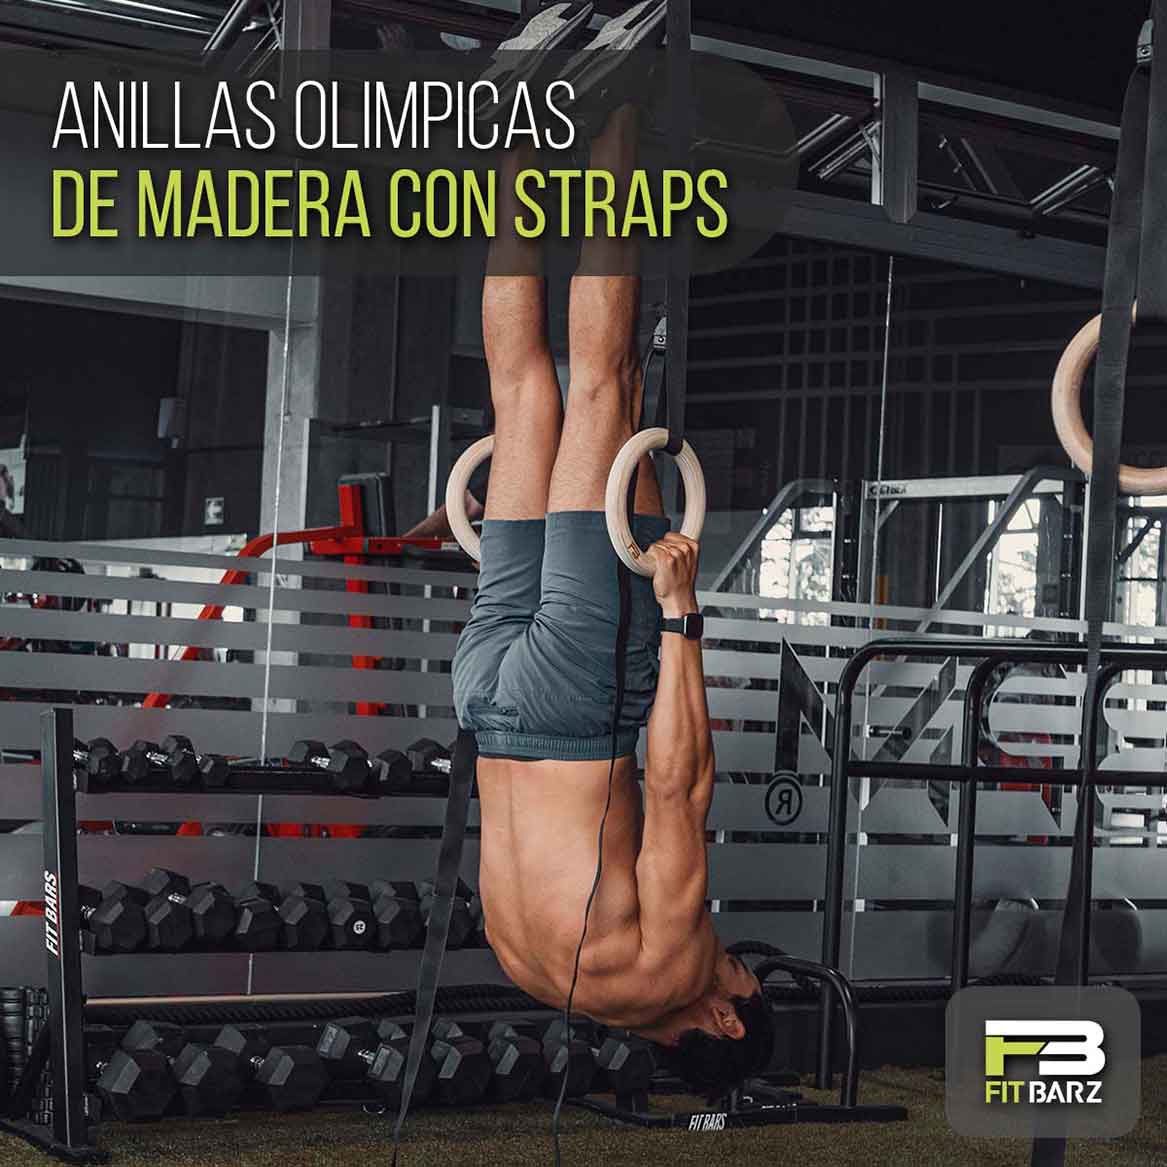 Anillas Olimpicas de Madera con Straps - Fitbarz